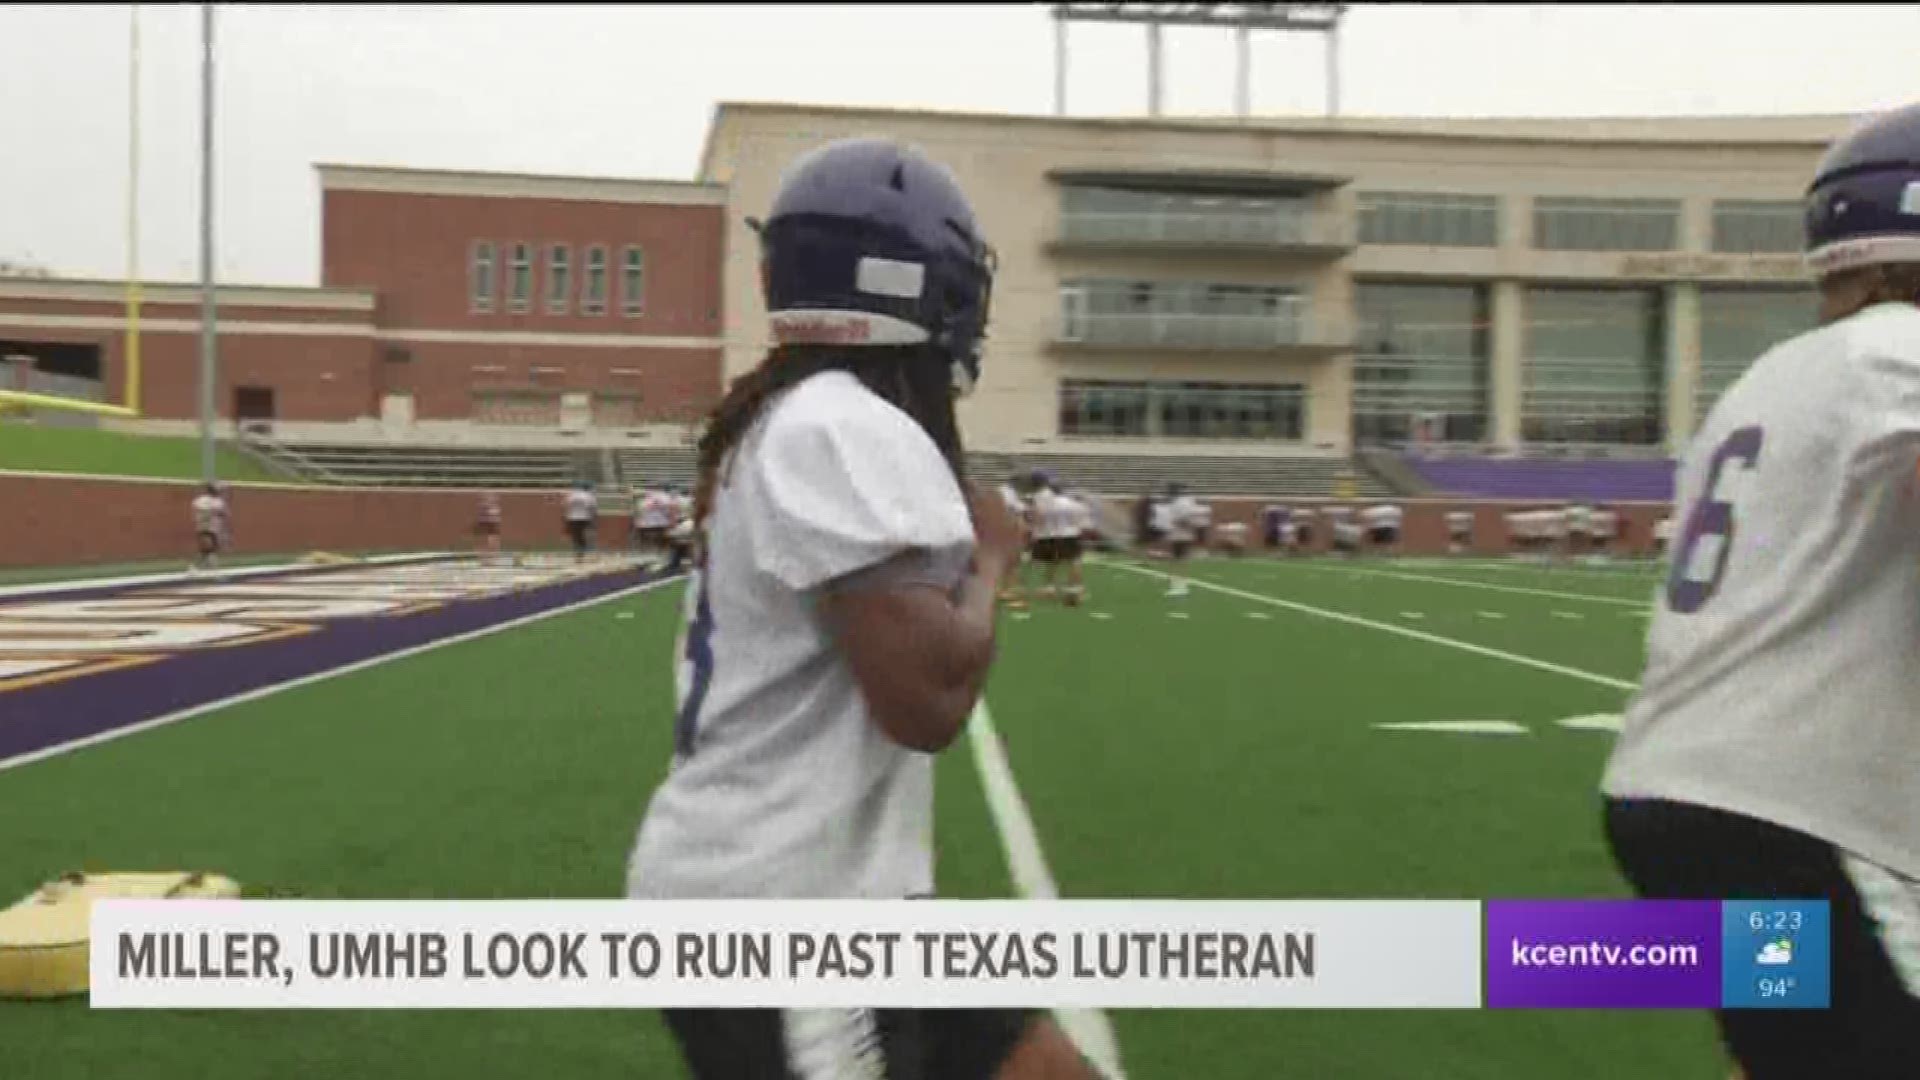 Miller, UMHB Looks to Run Past Texas Lutheran